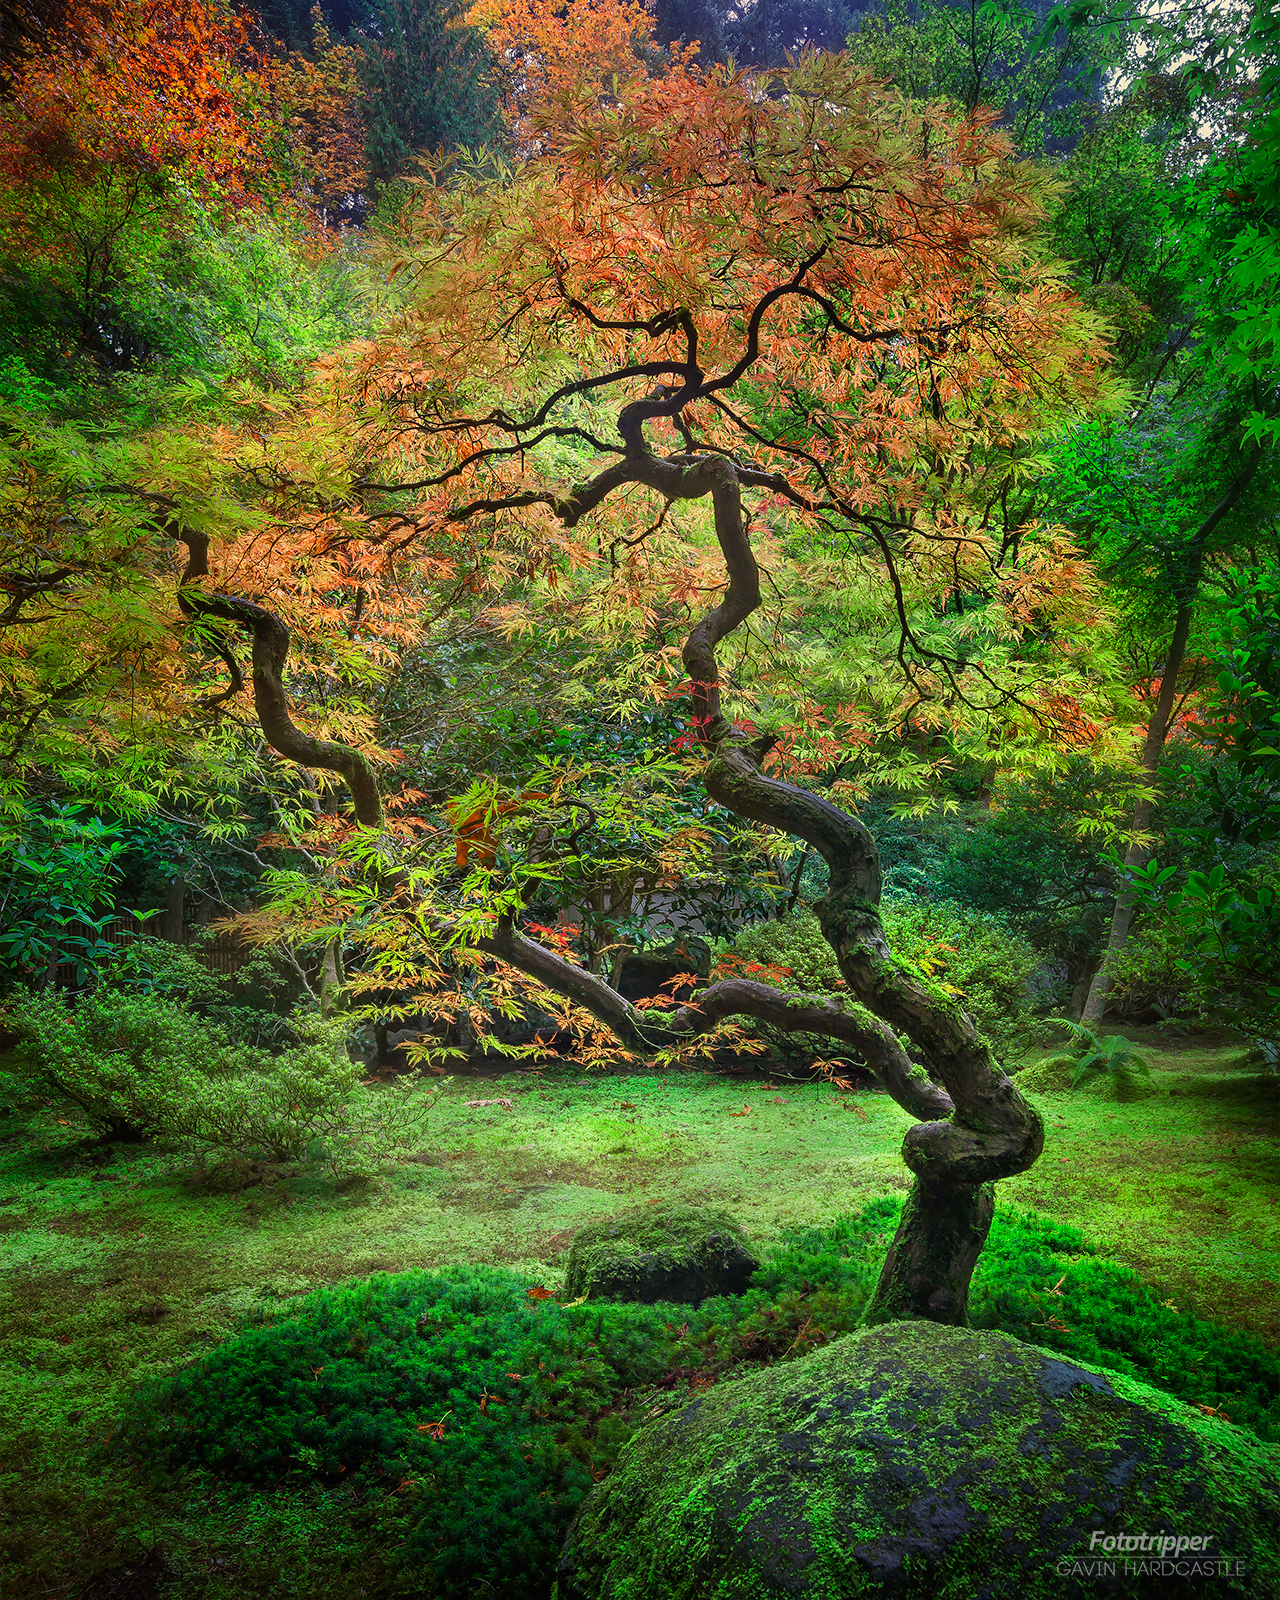 How to Photograph Portland Japanese Gardens